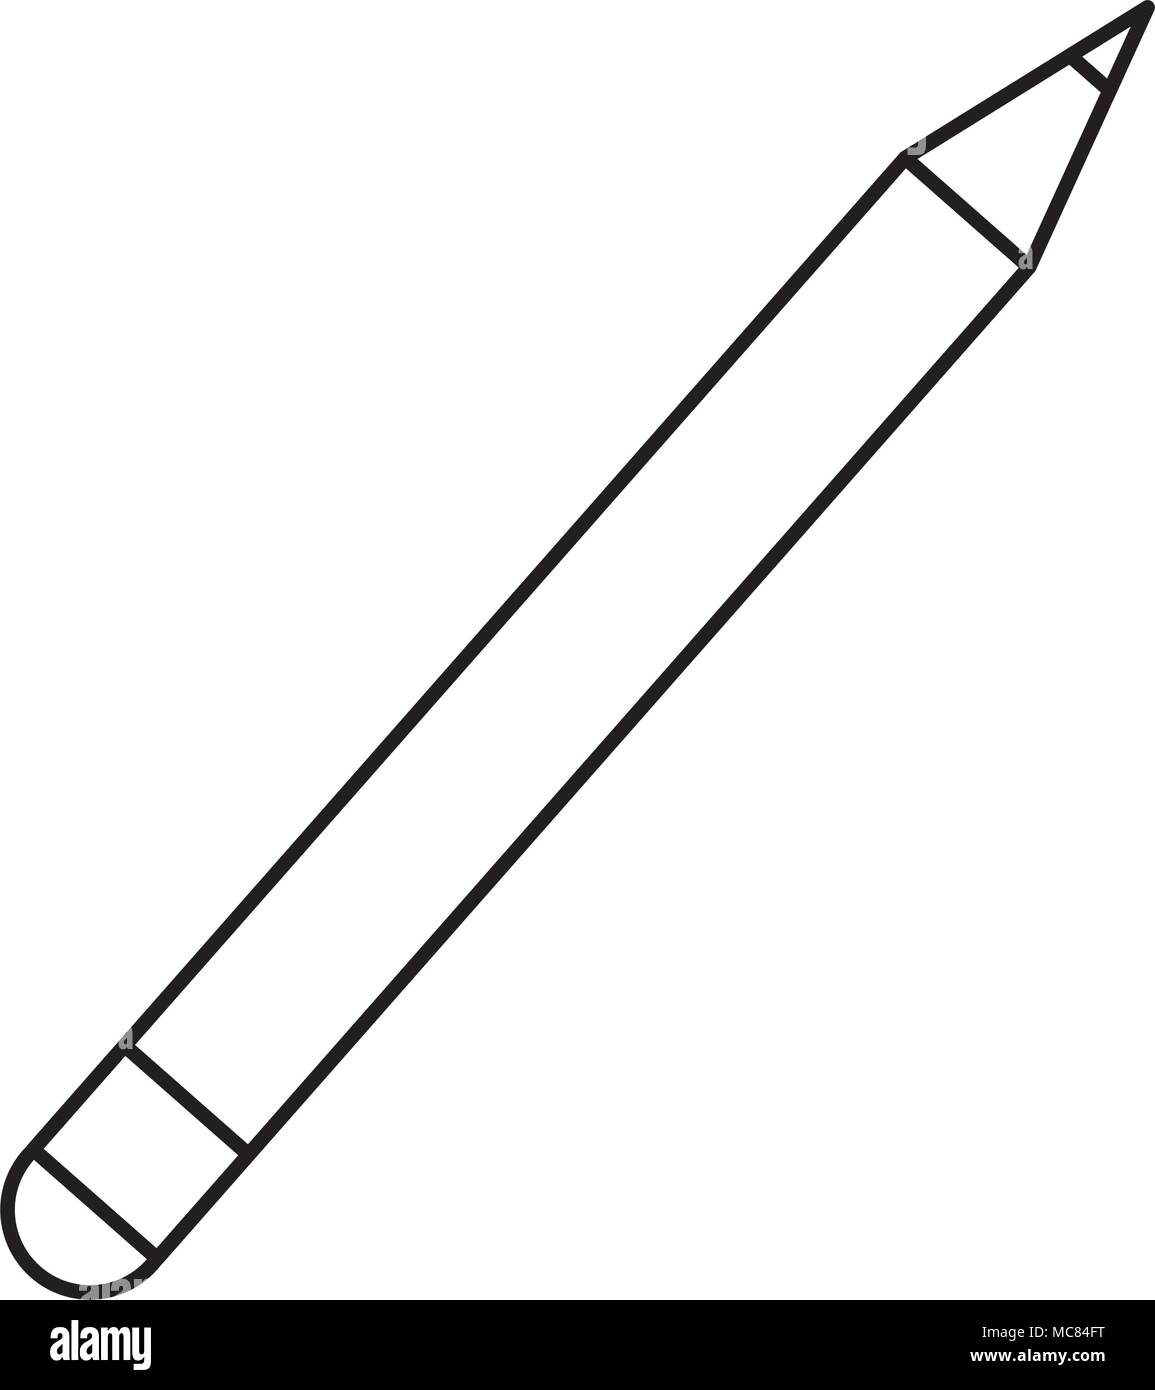 Línea escolar lápiz para dibujar y escribir objetos Imagen Vector de stock  - Alamy